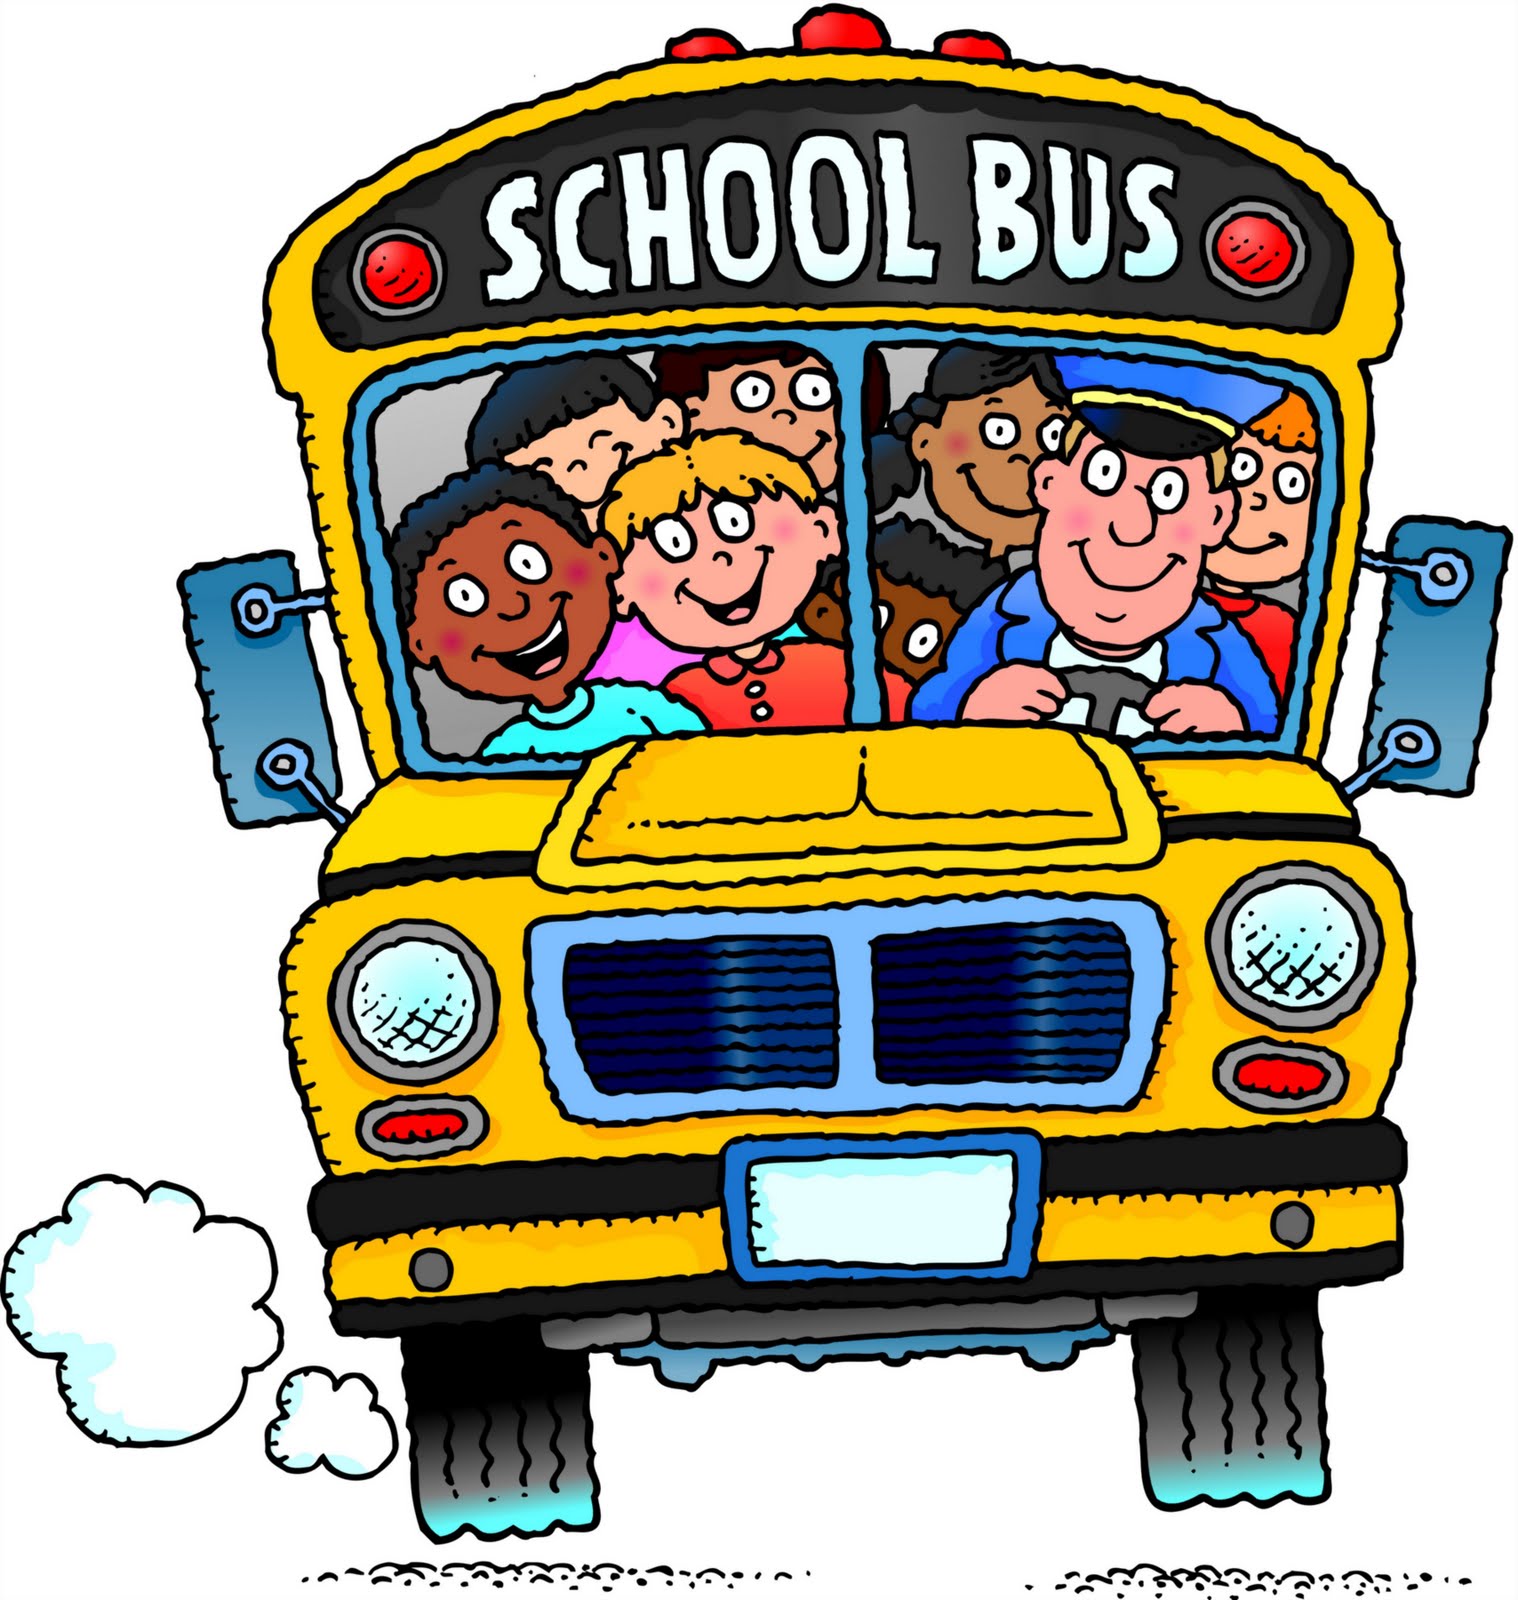 School bus picture.jpg